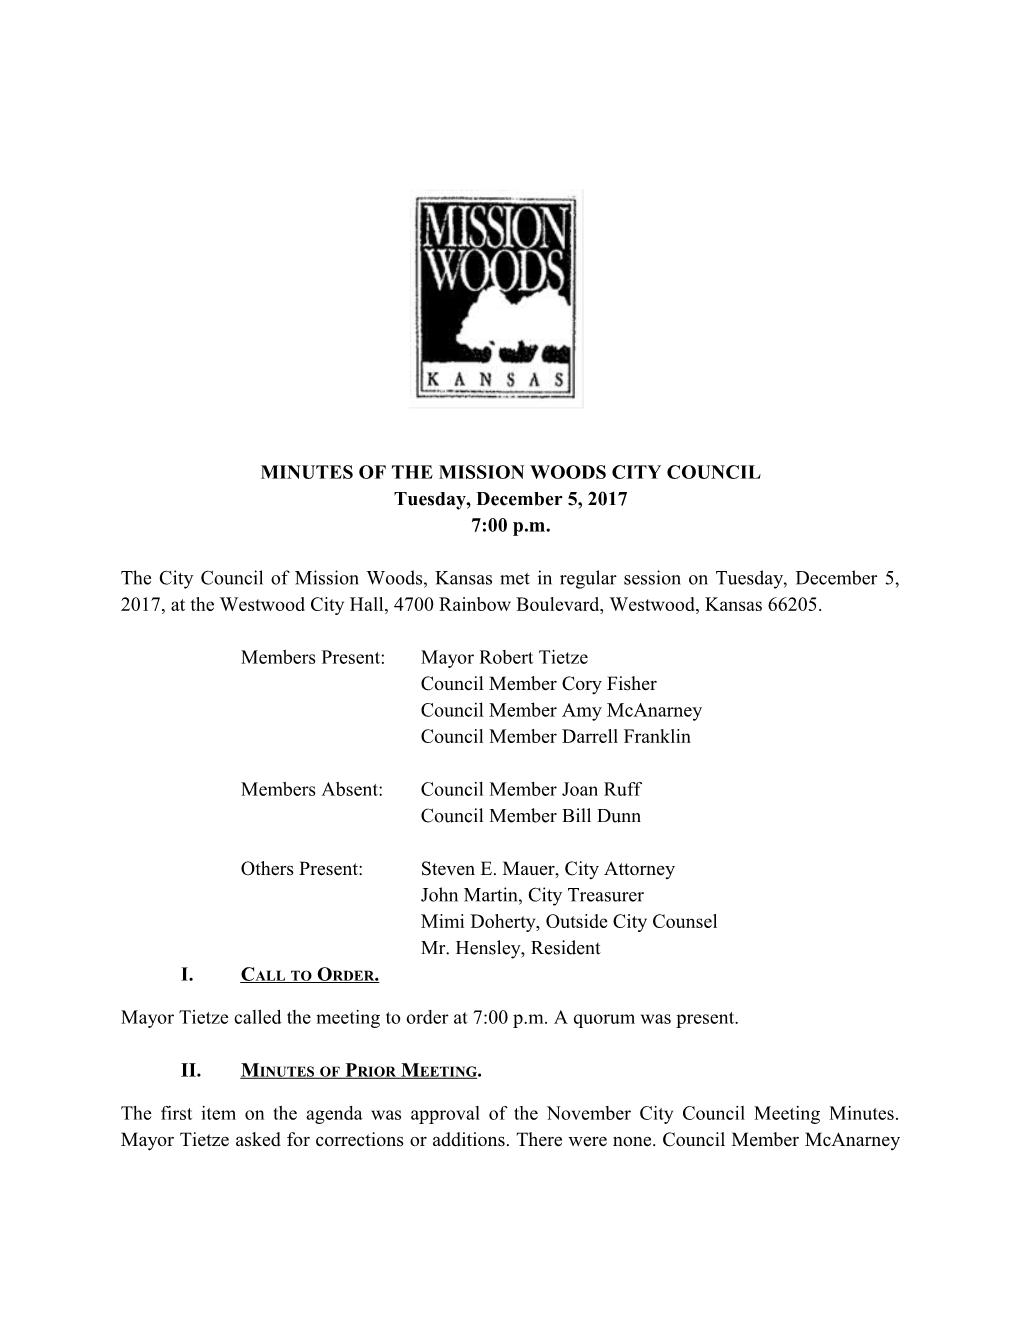 12-5-17 City Council Minutes (00032224)